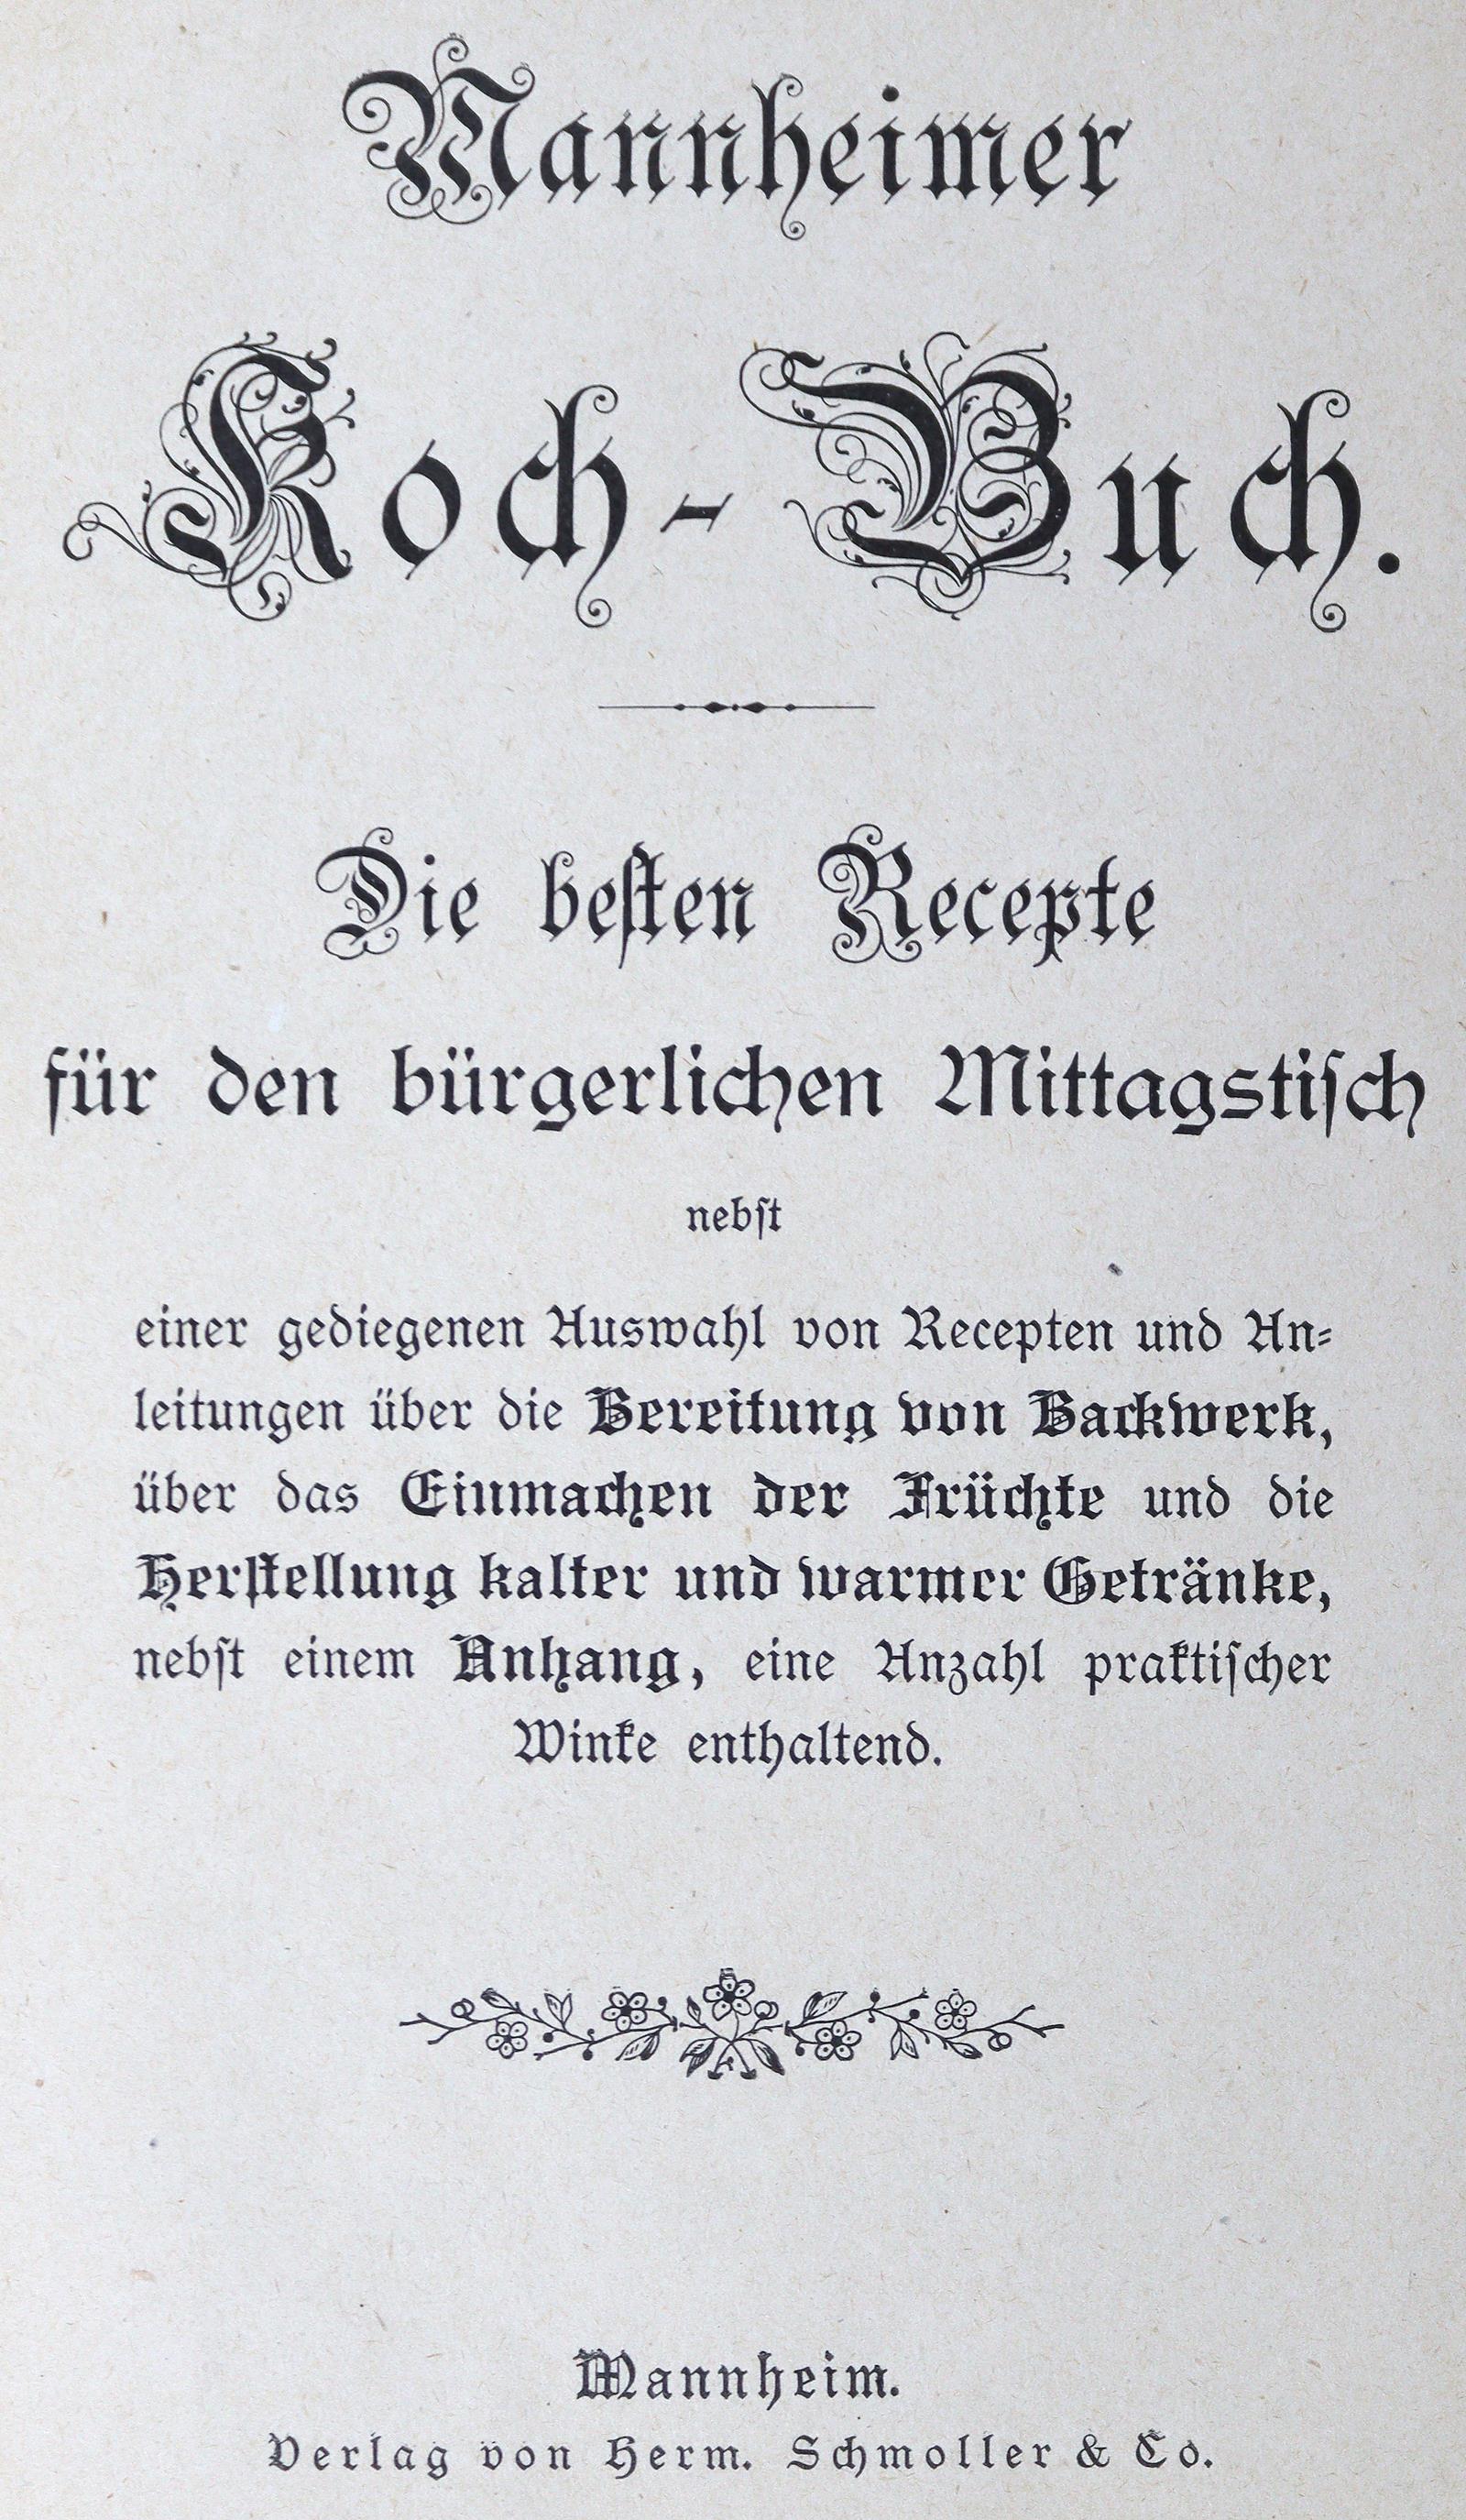 Mannheimer Koch-Buch. | Bild Nr.2